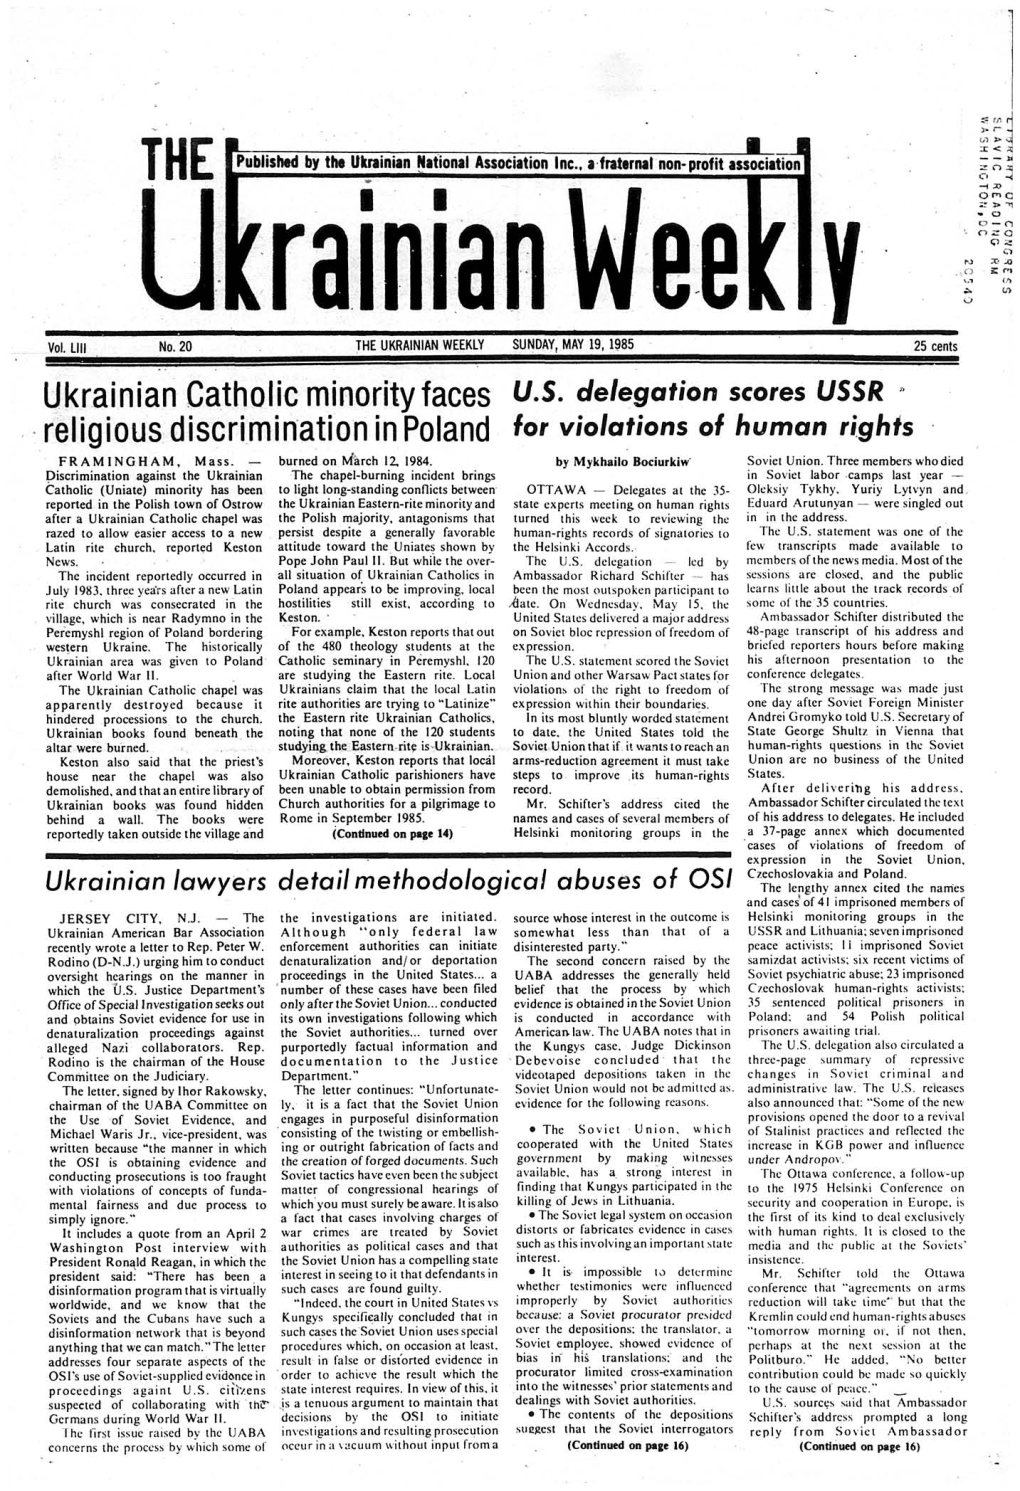 The Ukrainian Weekly 1985, No.20